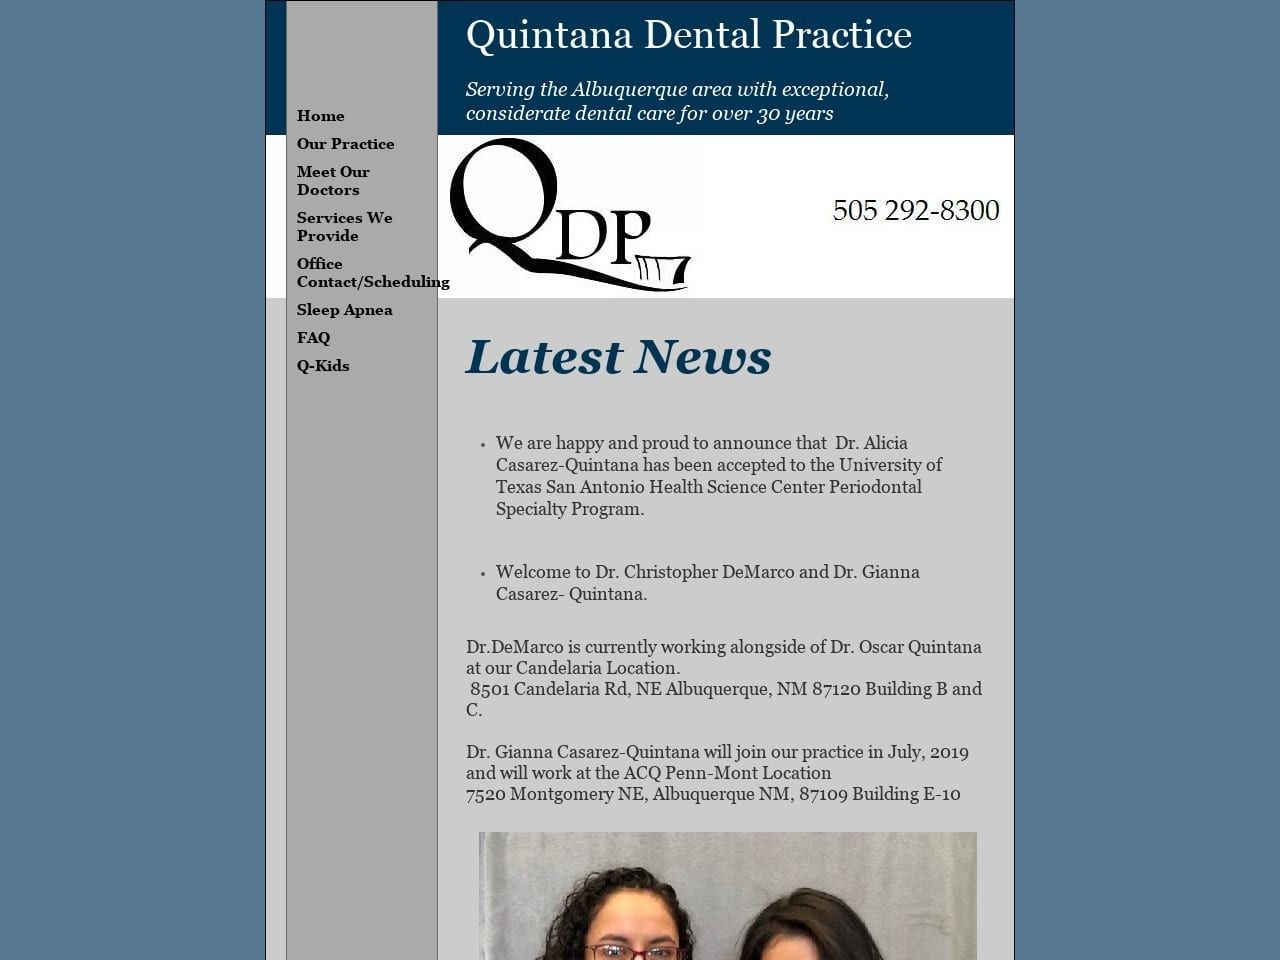 Quintana Dental Practice Website Screenshot from quintanadental.com